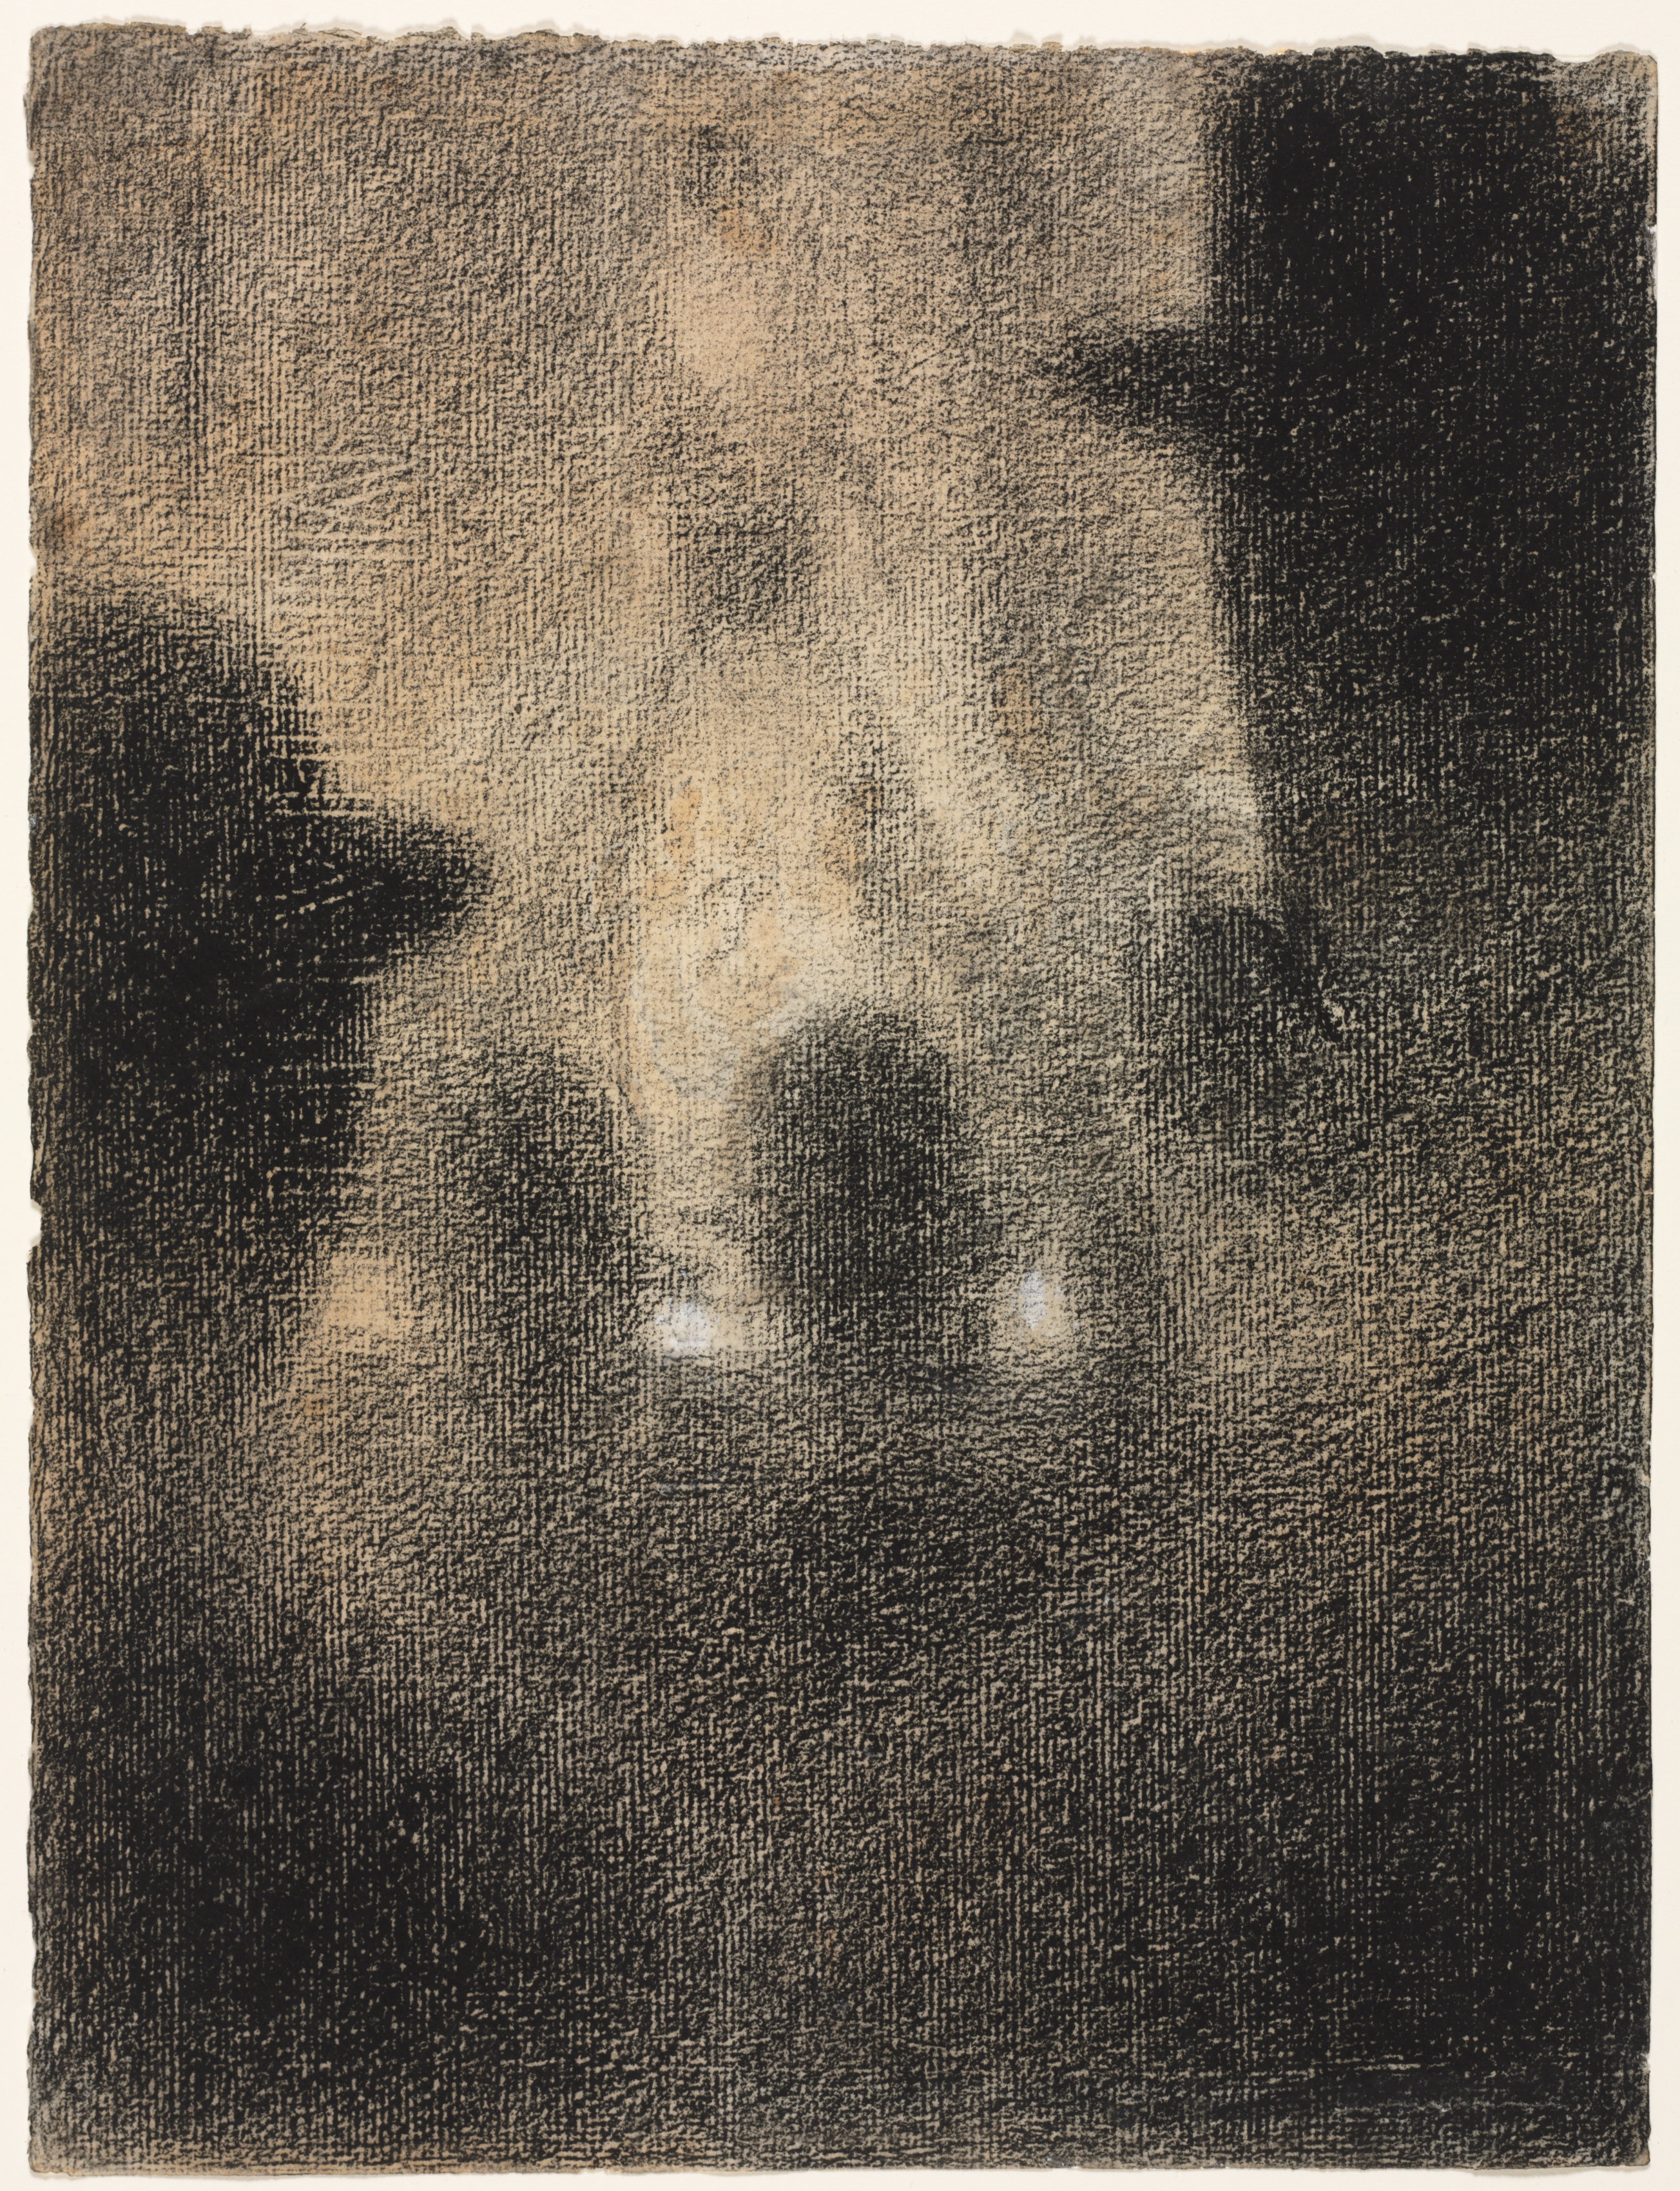 Кафе-концерт by Georges Seurat - 1887-88 - 31.4 x 23.6 цм 